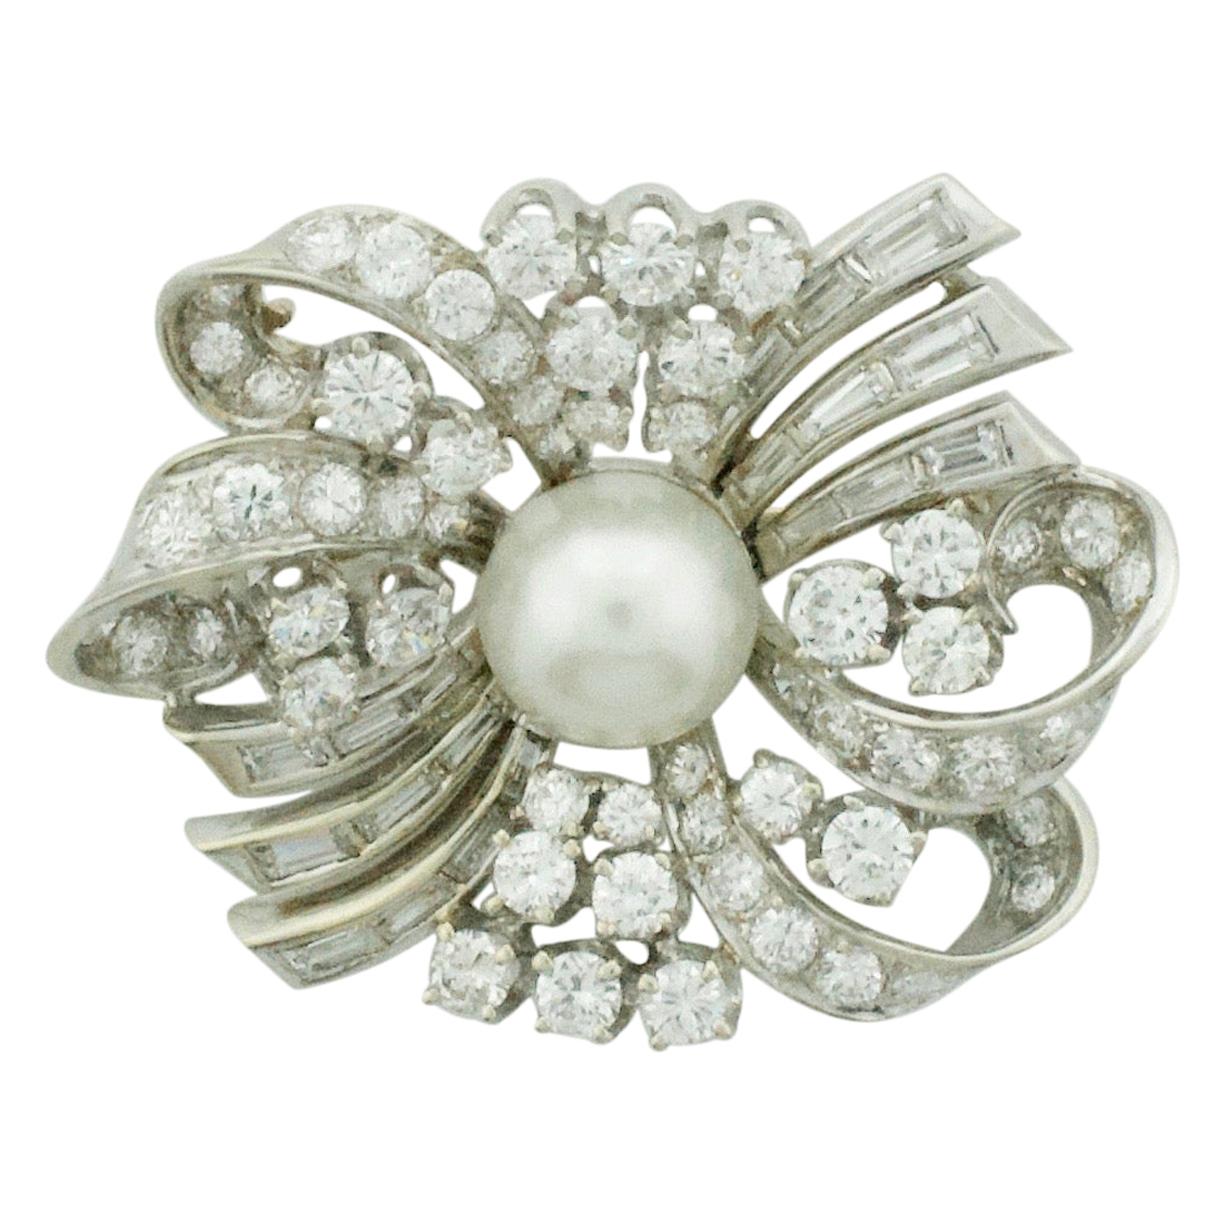 Collier de perles et de diamants, broche en or blanc 5,35 carats, c. 1950